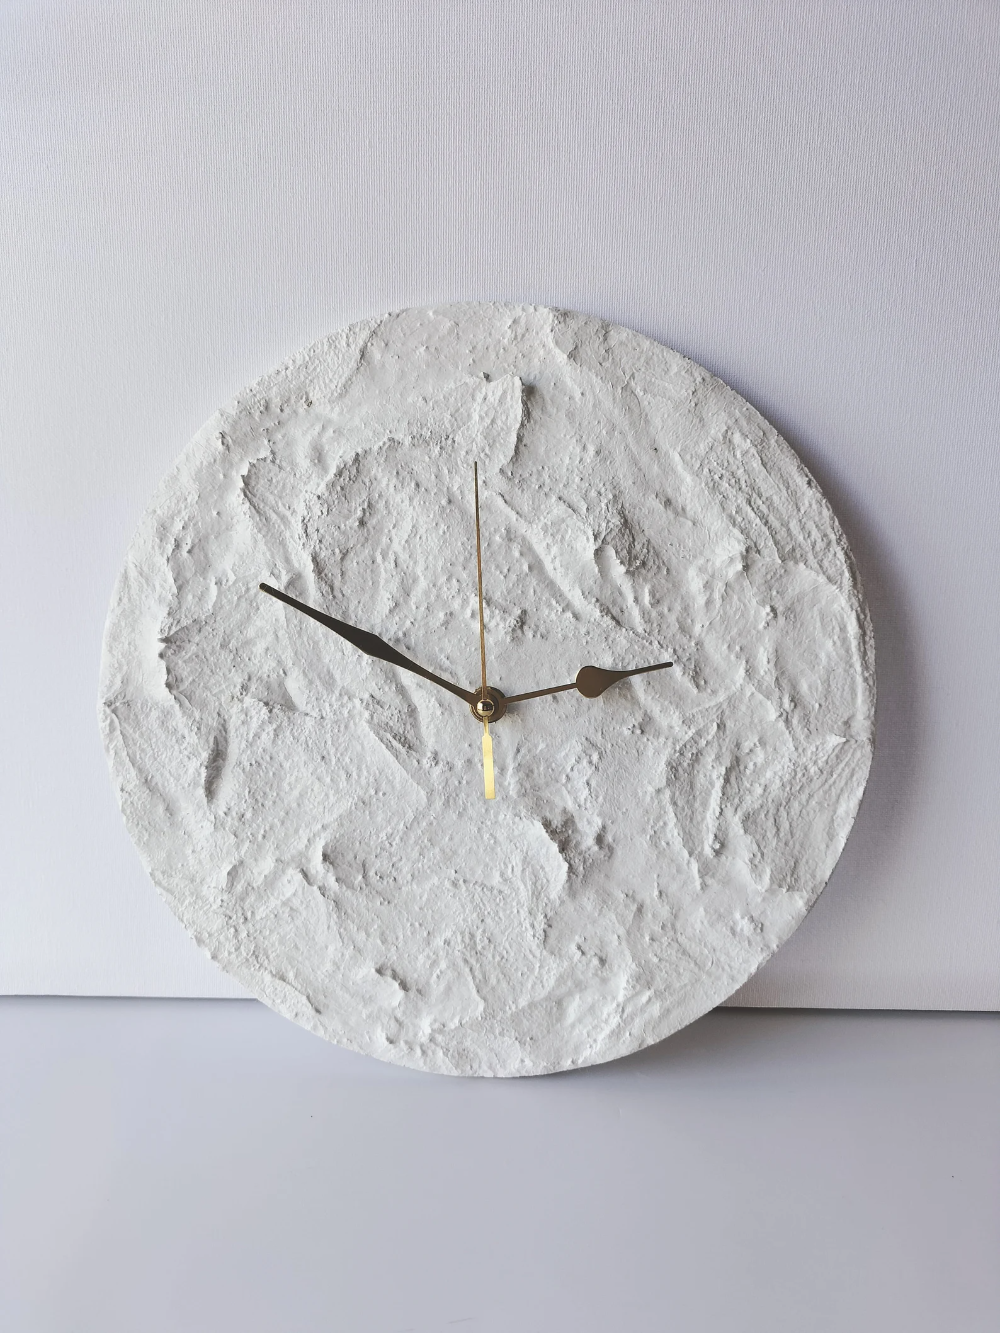 The Beauty of Oversized Modern Wall Clocks